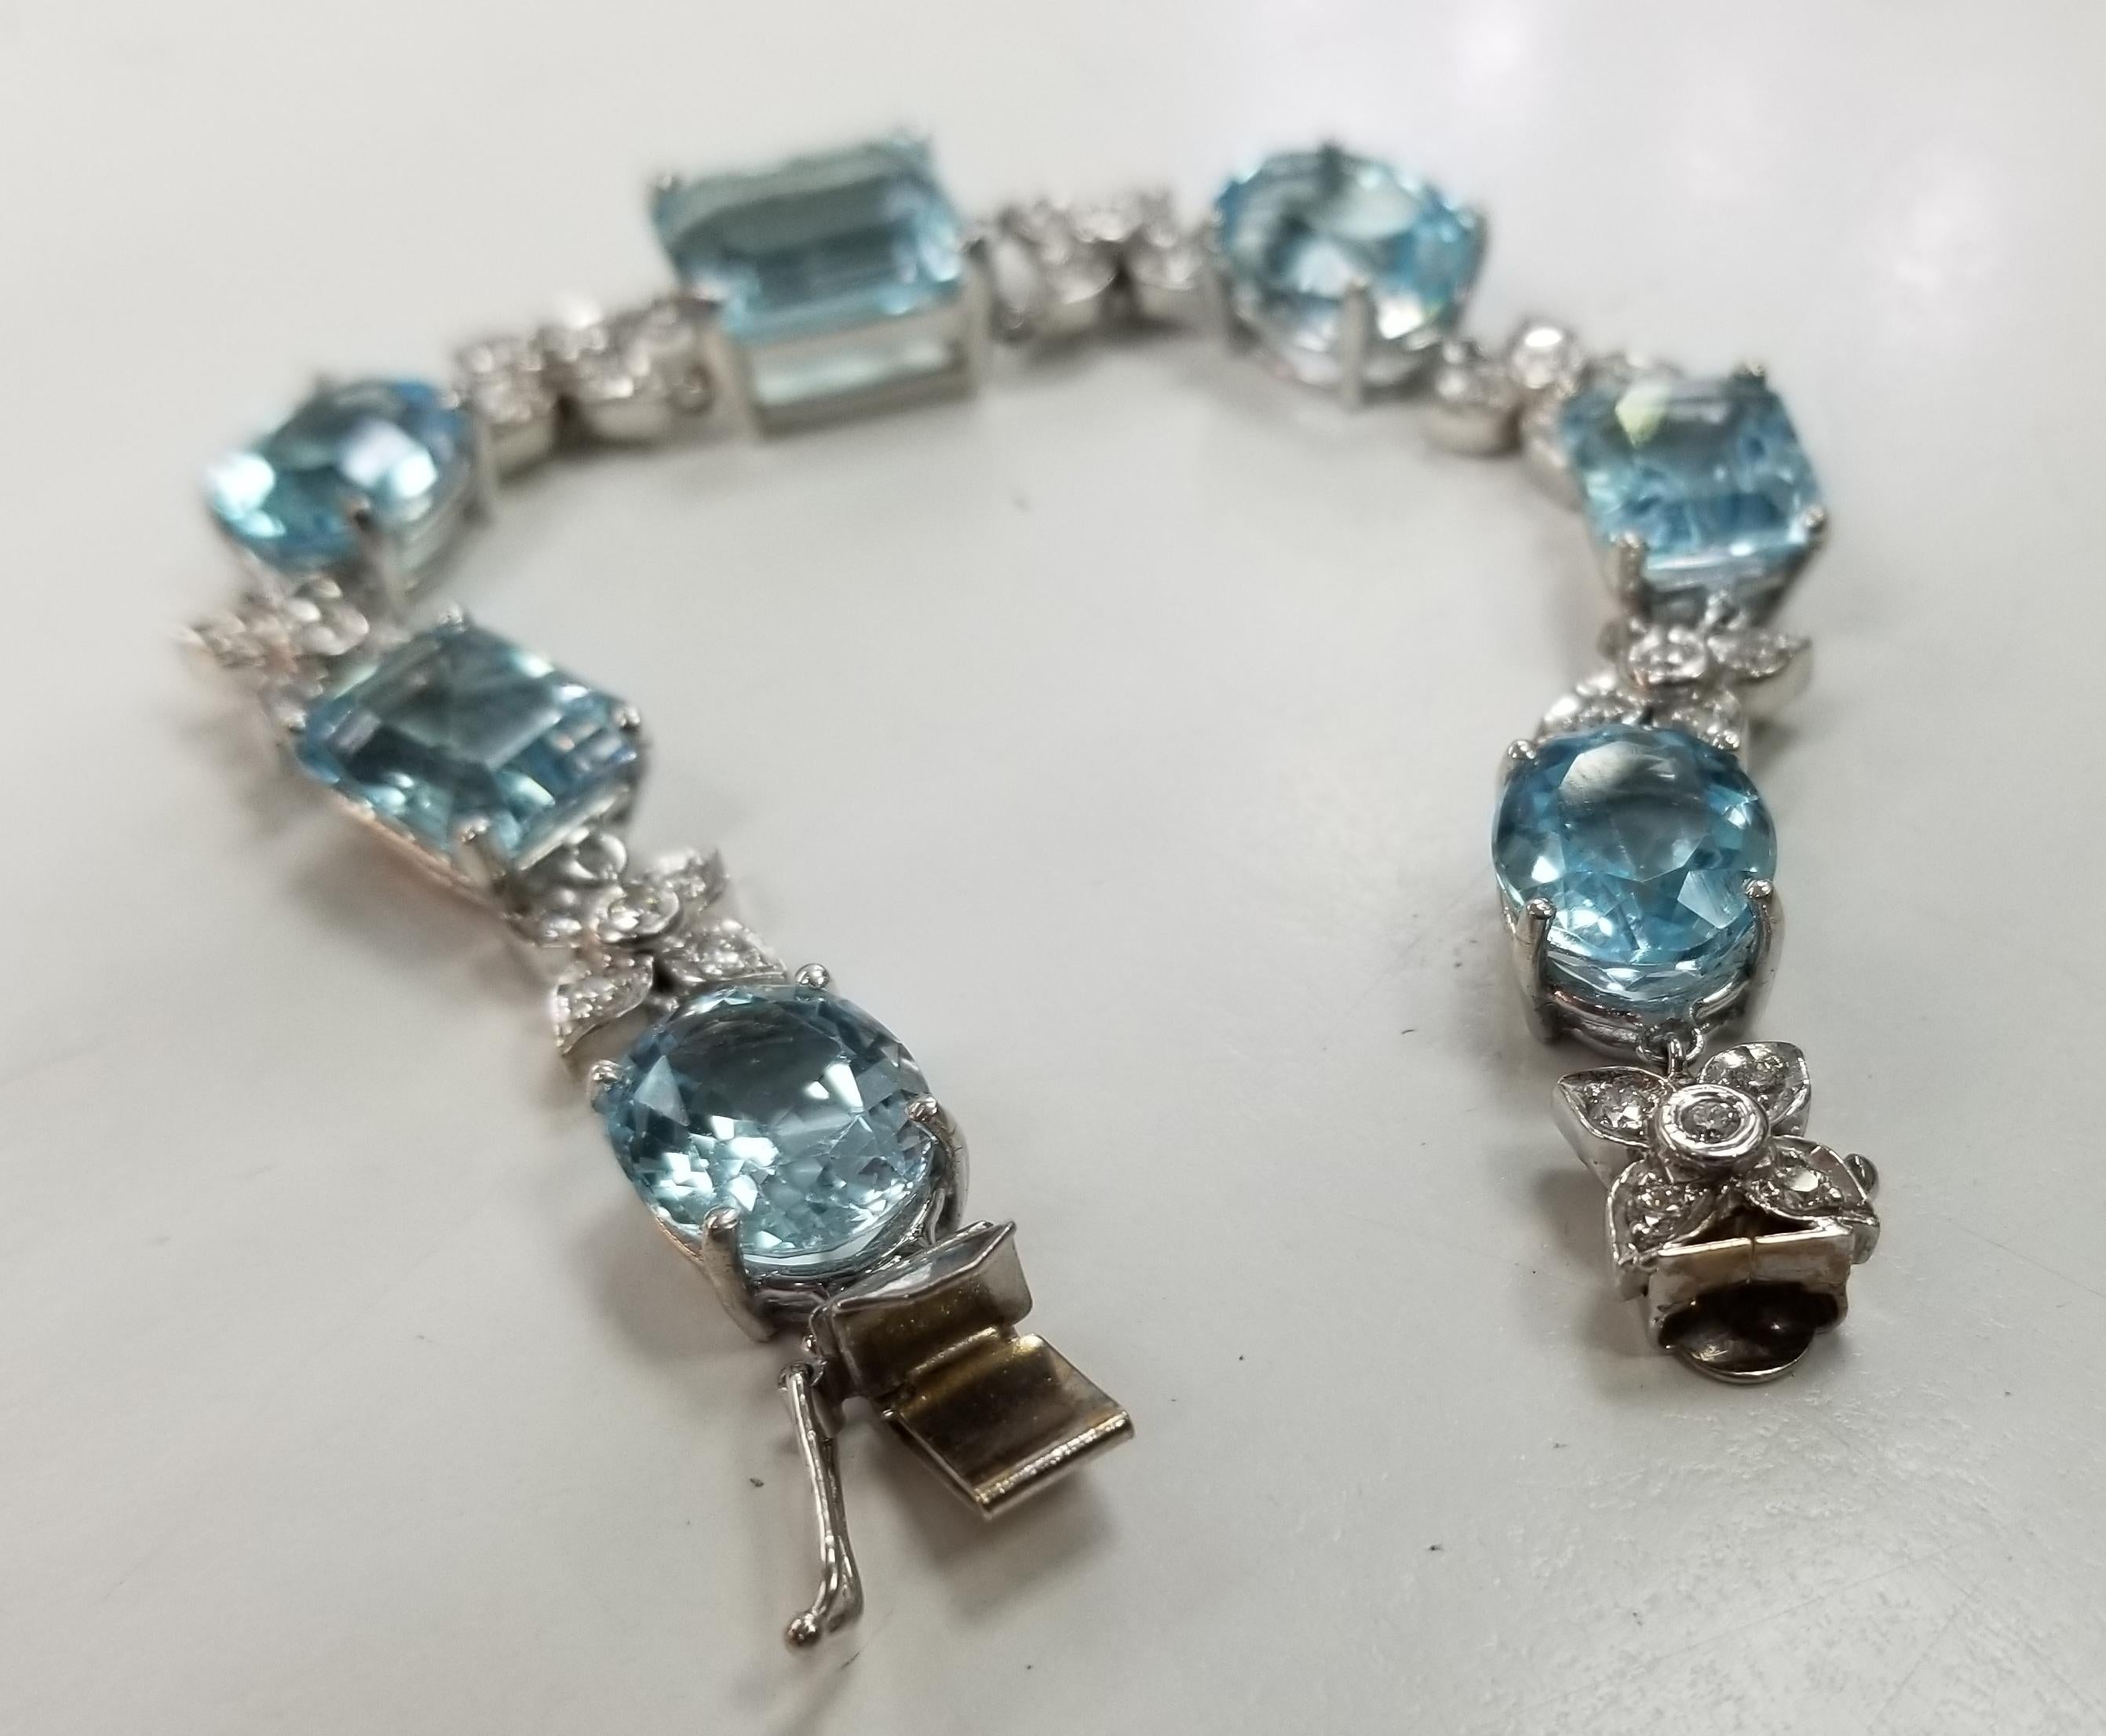 14 karat white gold Diamond and Blue Topaz bracelet, containing 35 round full cut diamonds; color 